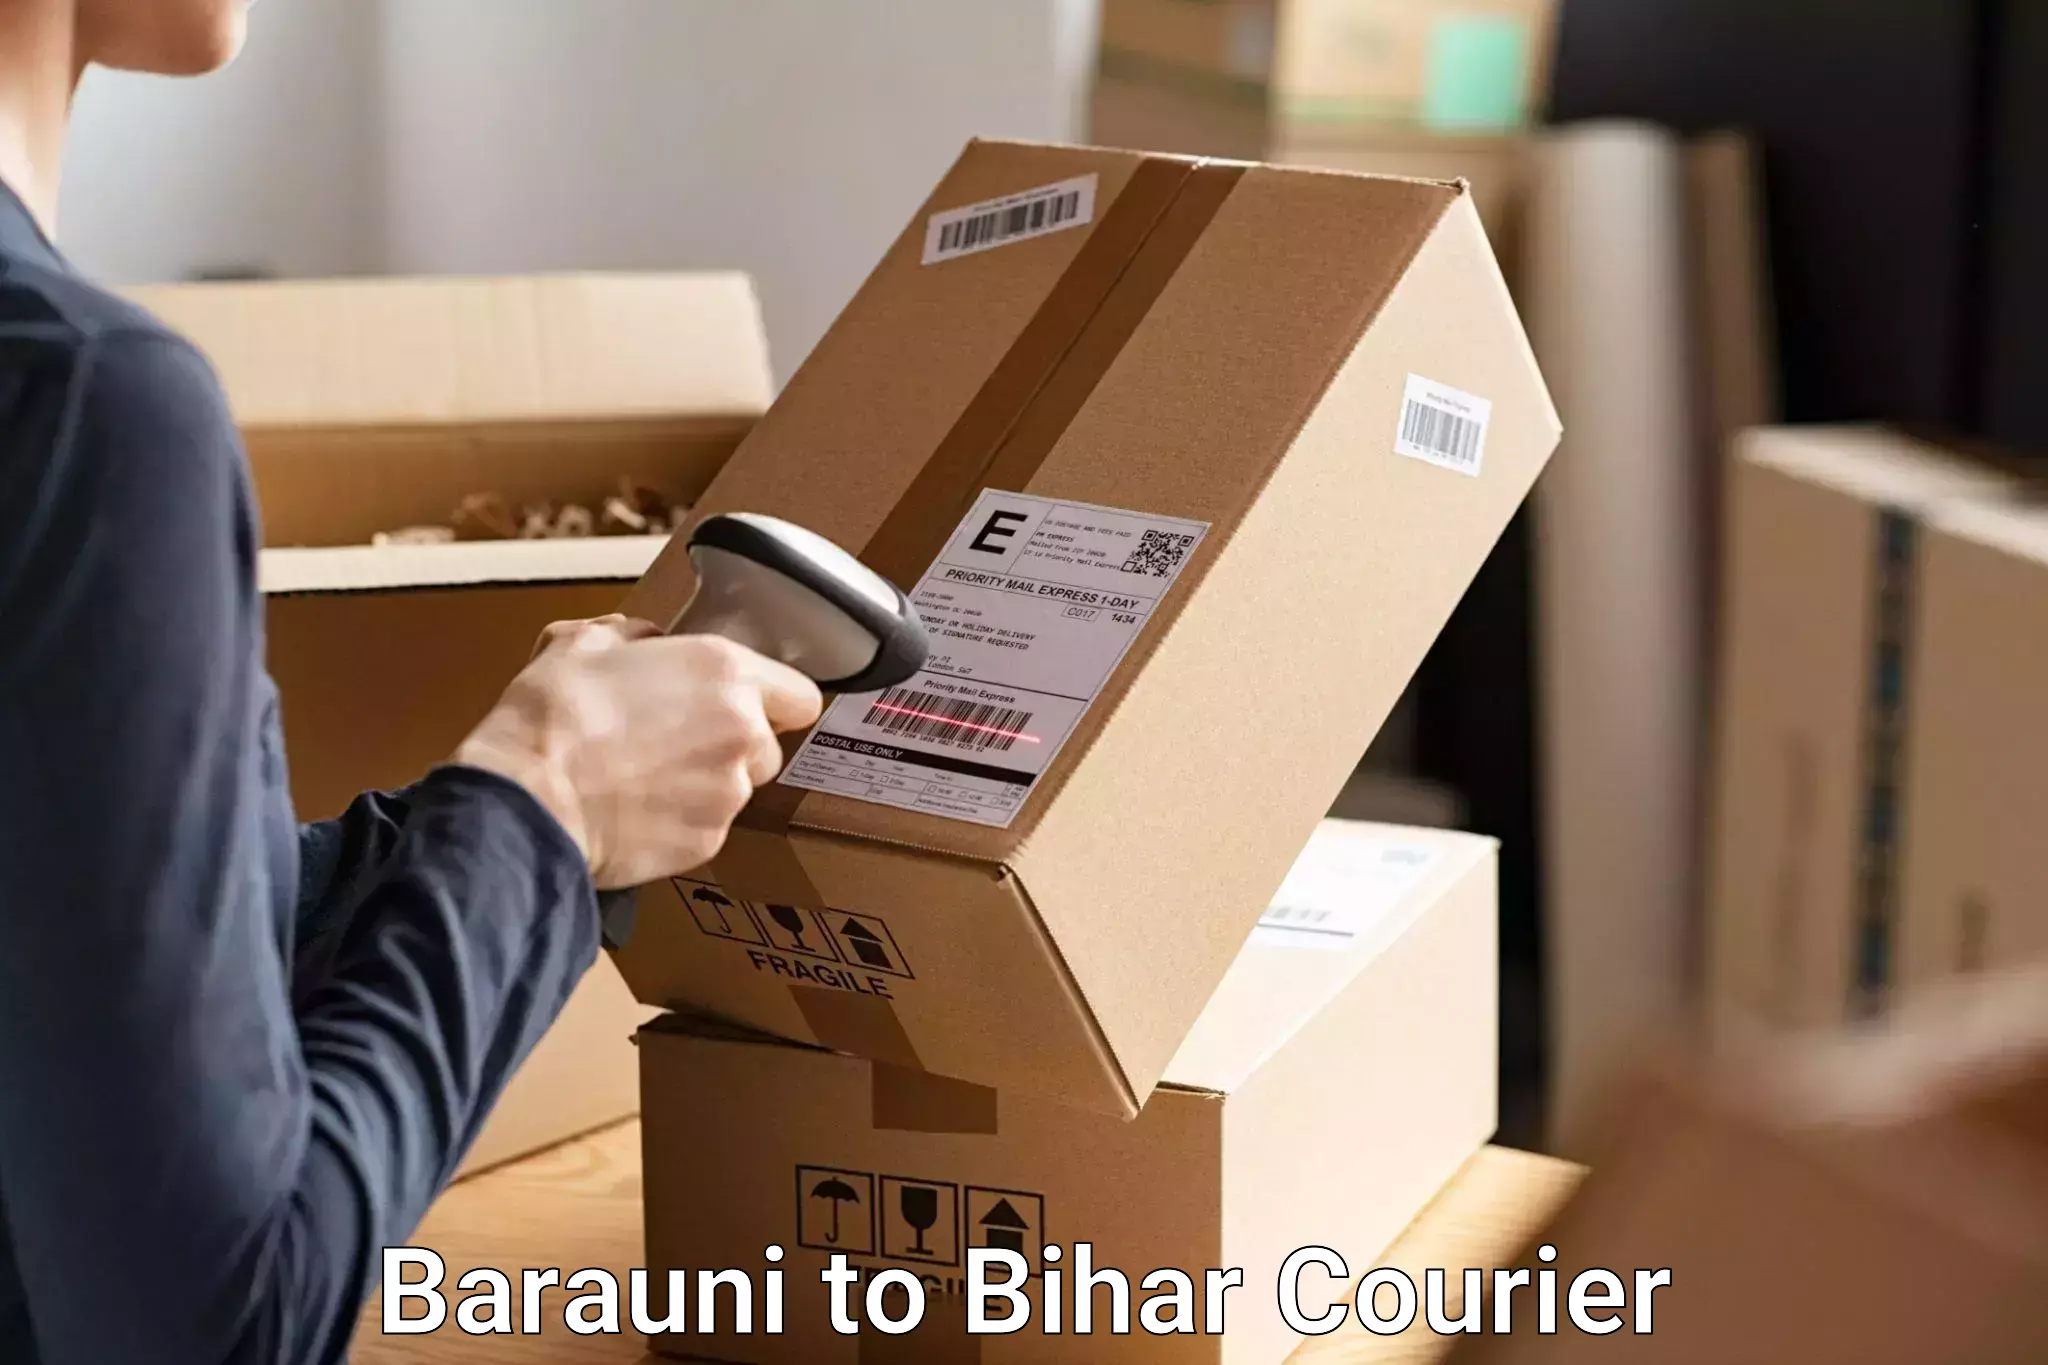 Personal effects shipping in Barauni to Madhepura